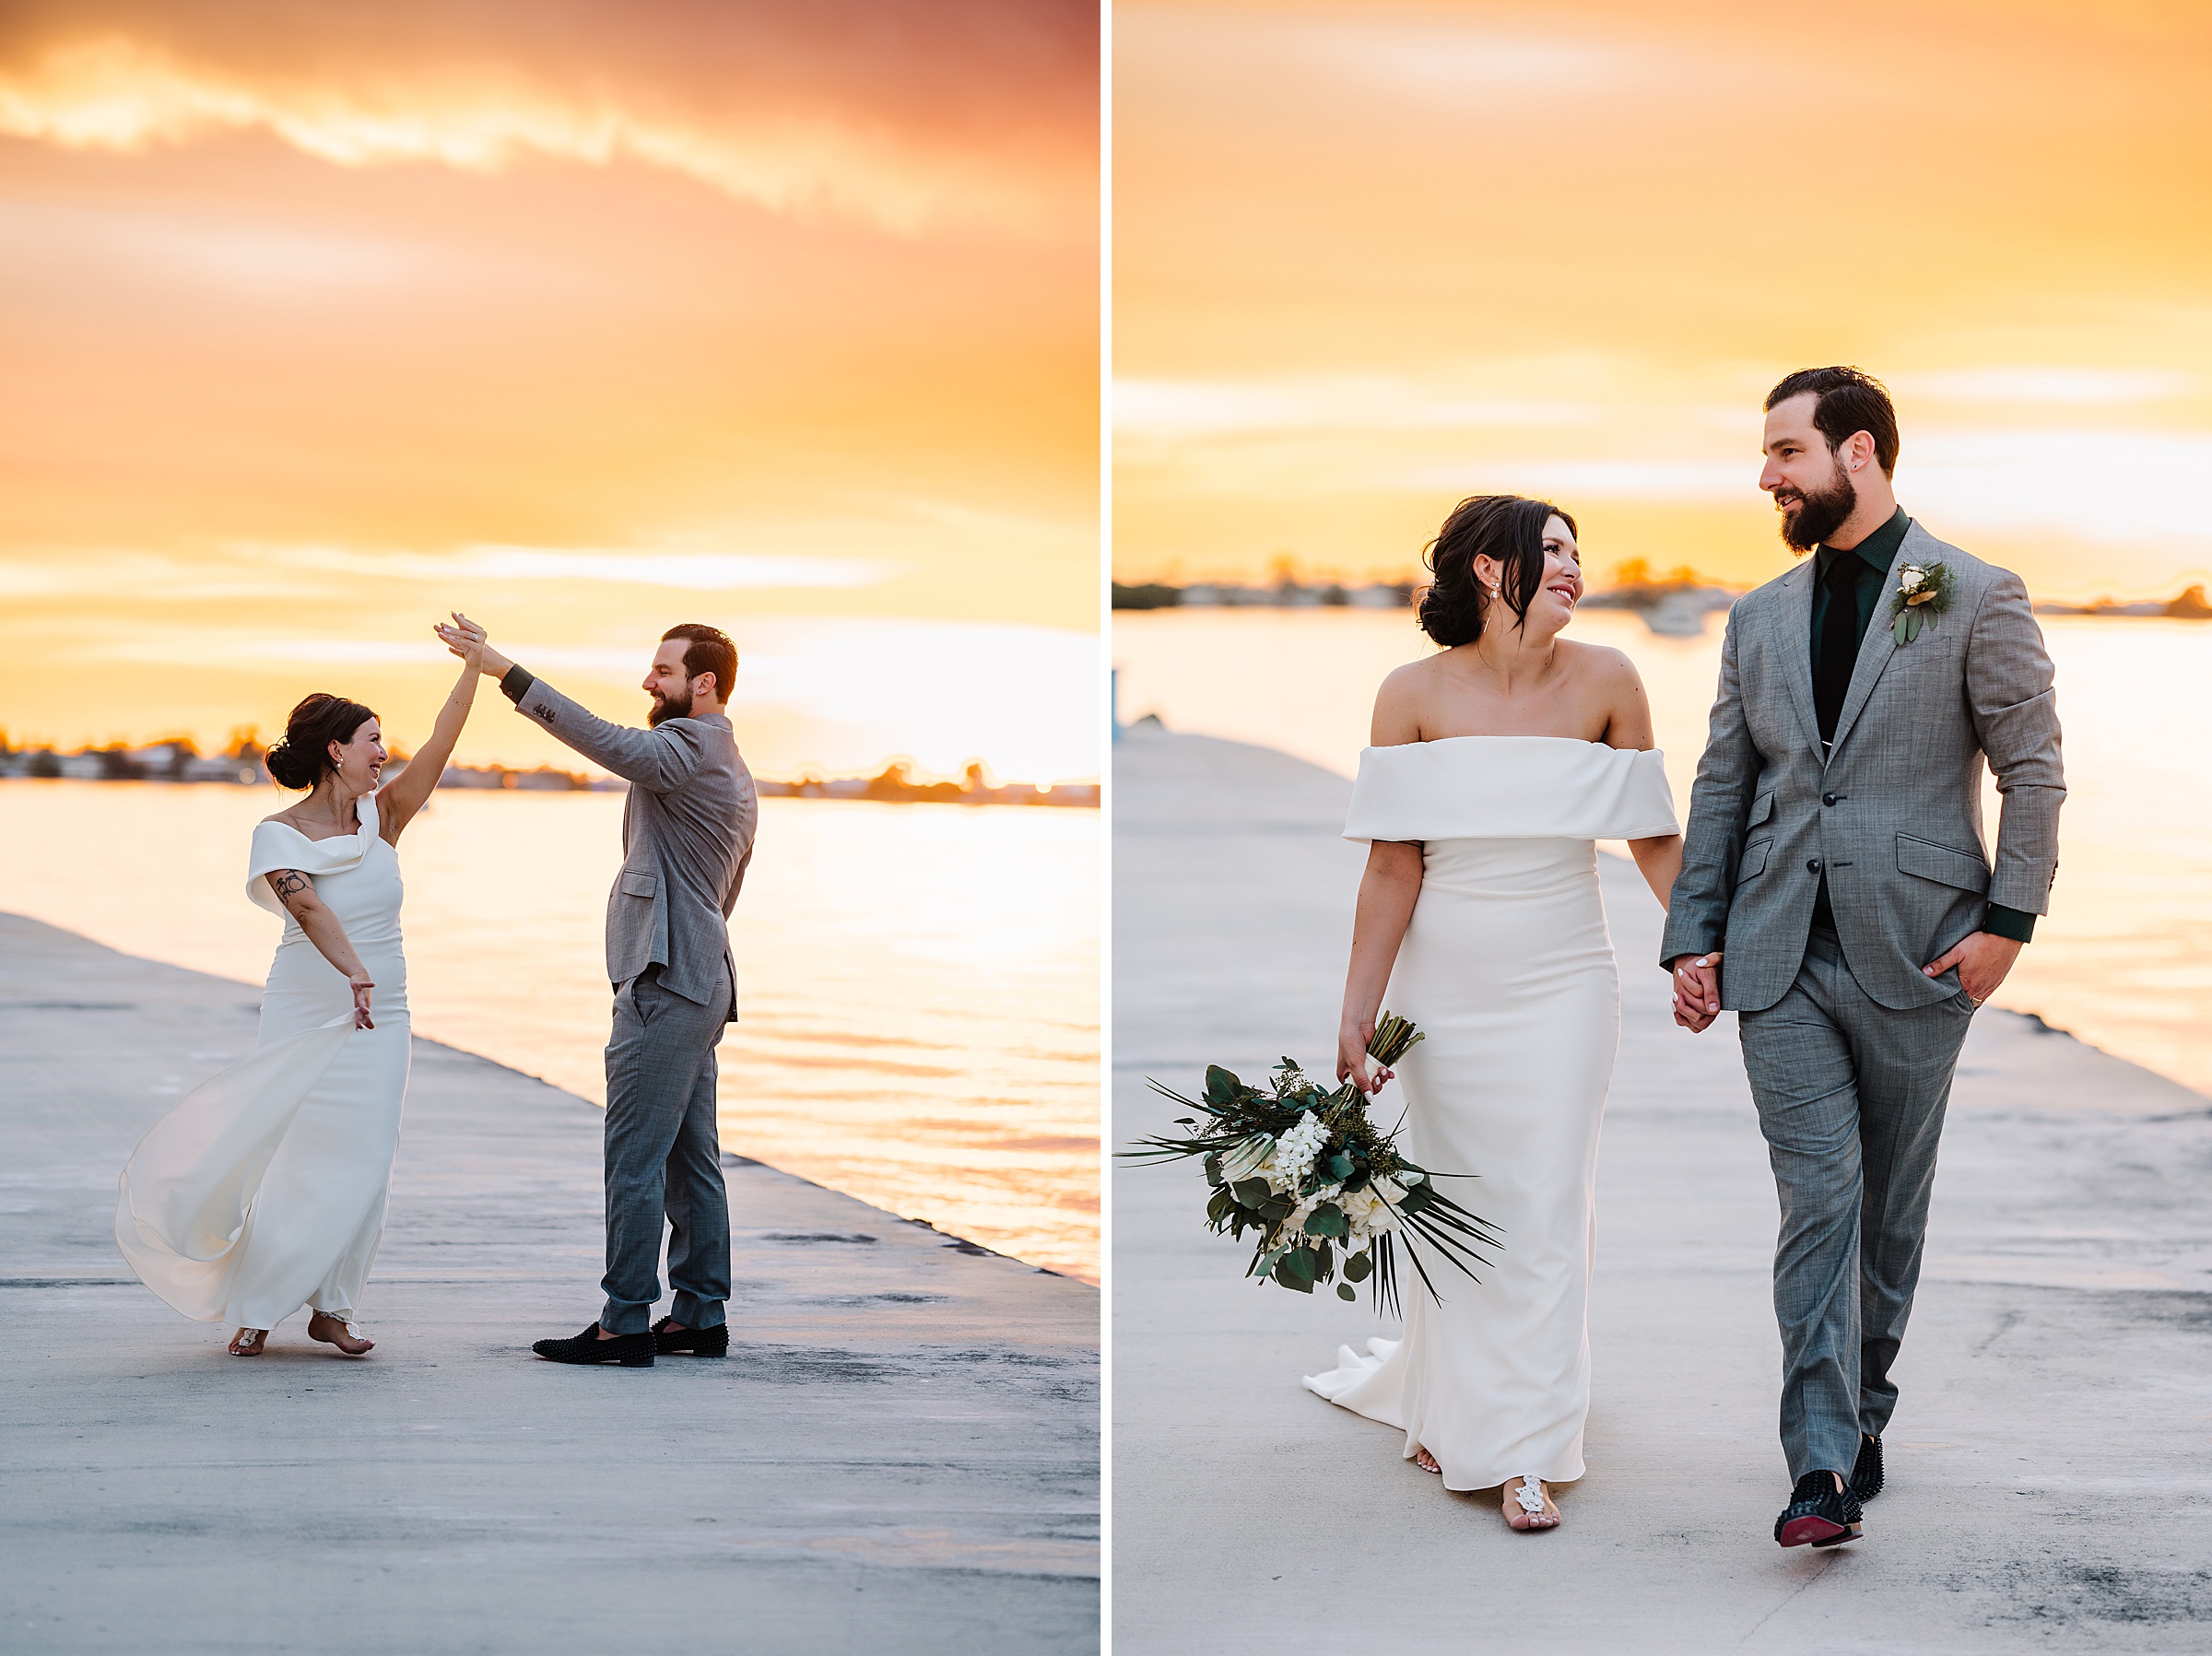 Newlyweds walking on a Dream Bay Resort dock overlooking the Florida Keys waters.